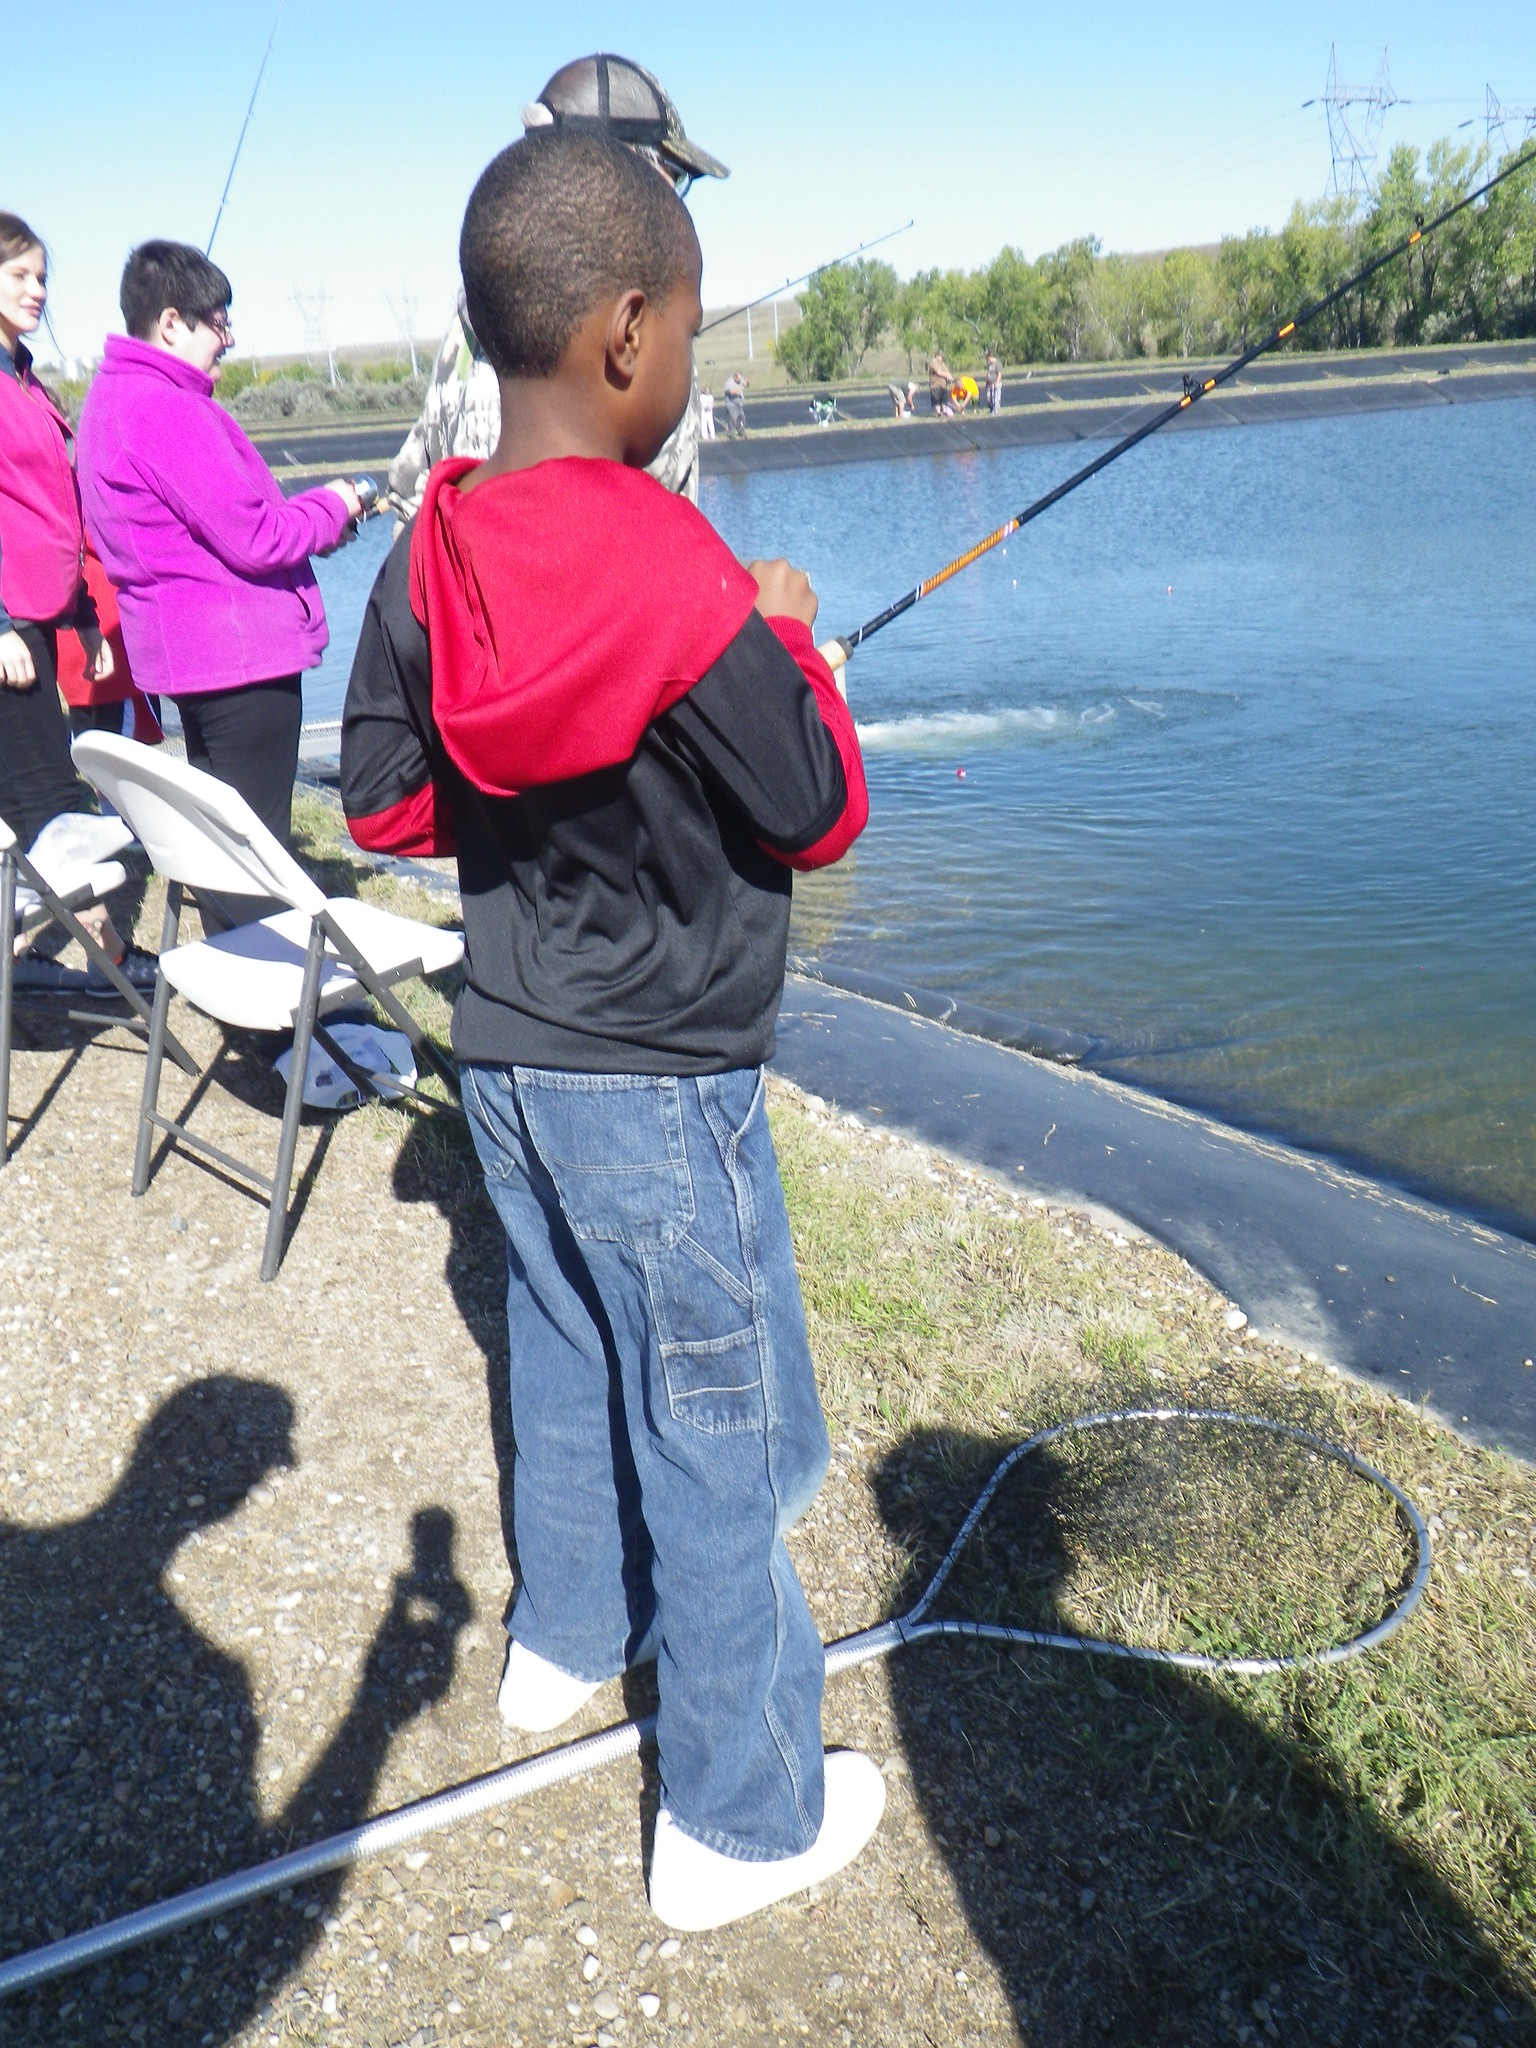 Kids Fishing Day at Garrison Dam National Fish Hatchery